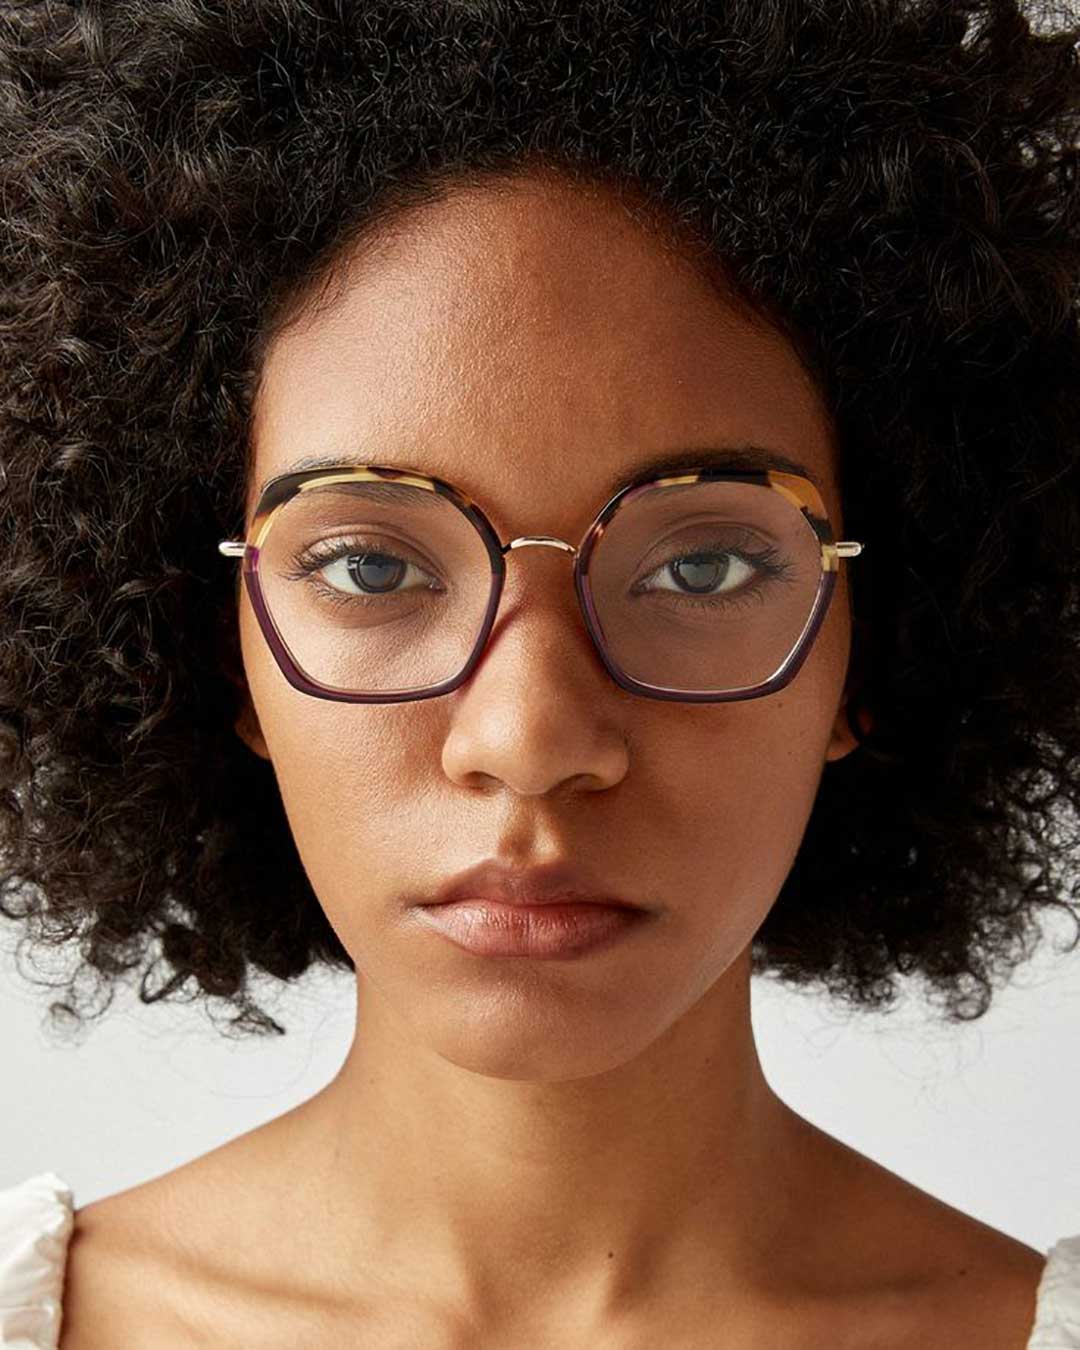 Black woman with afro hair wearing large geometric eyeglasses frame